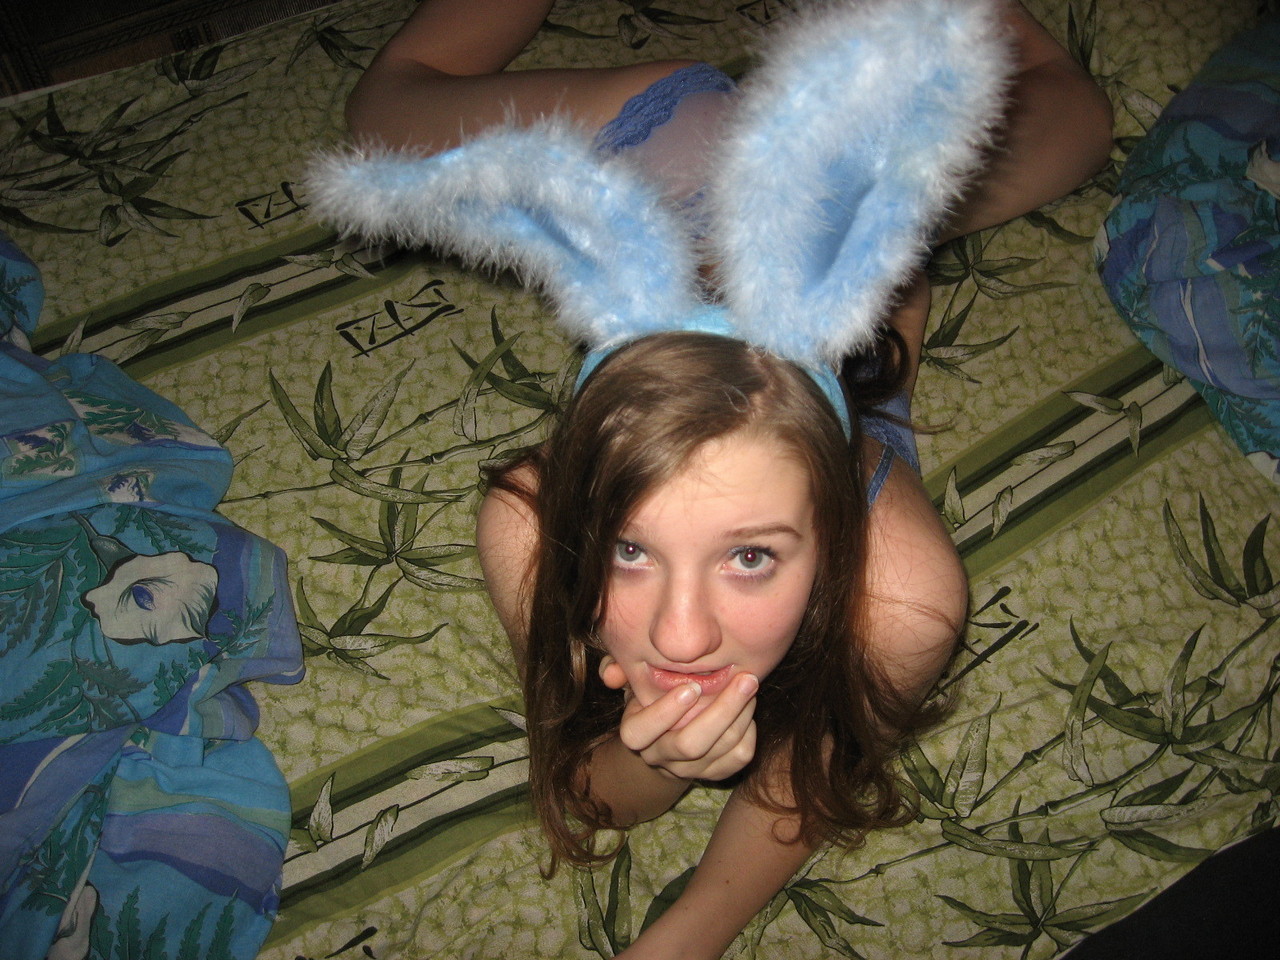 Blue Eared Bunny